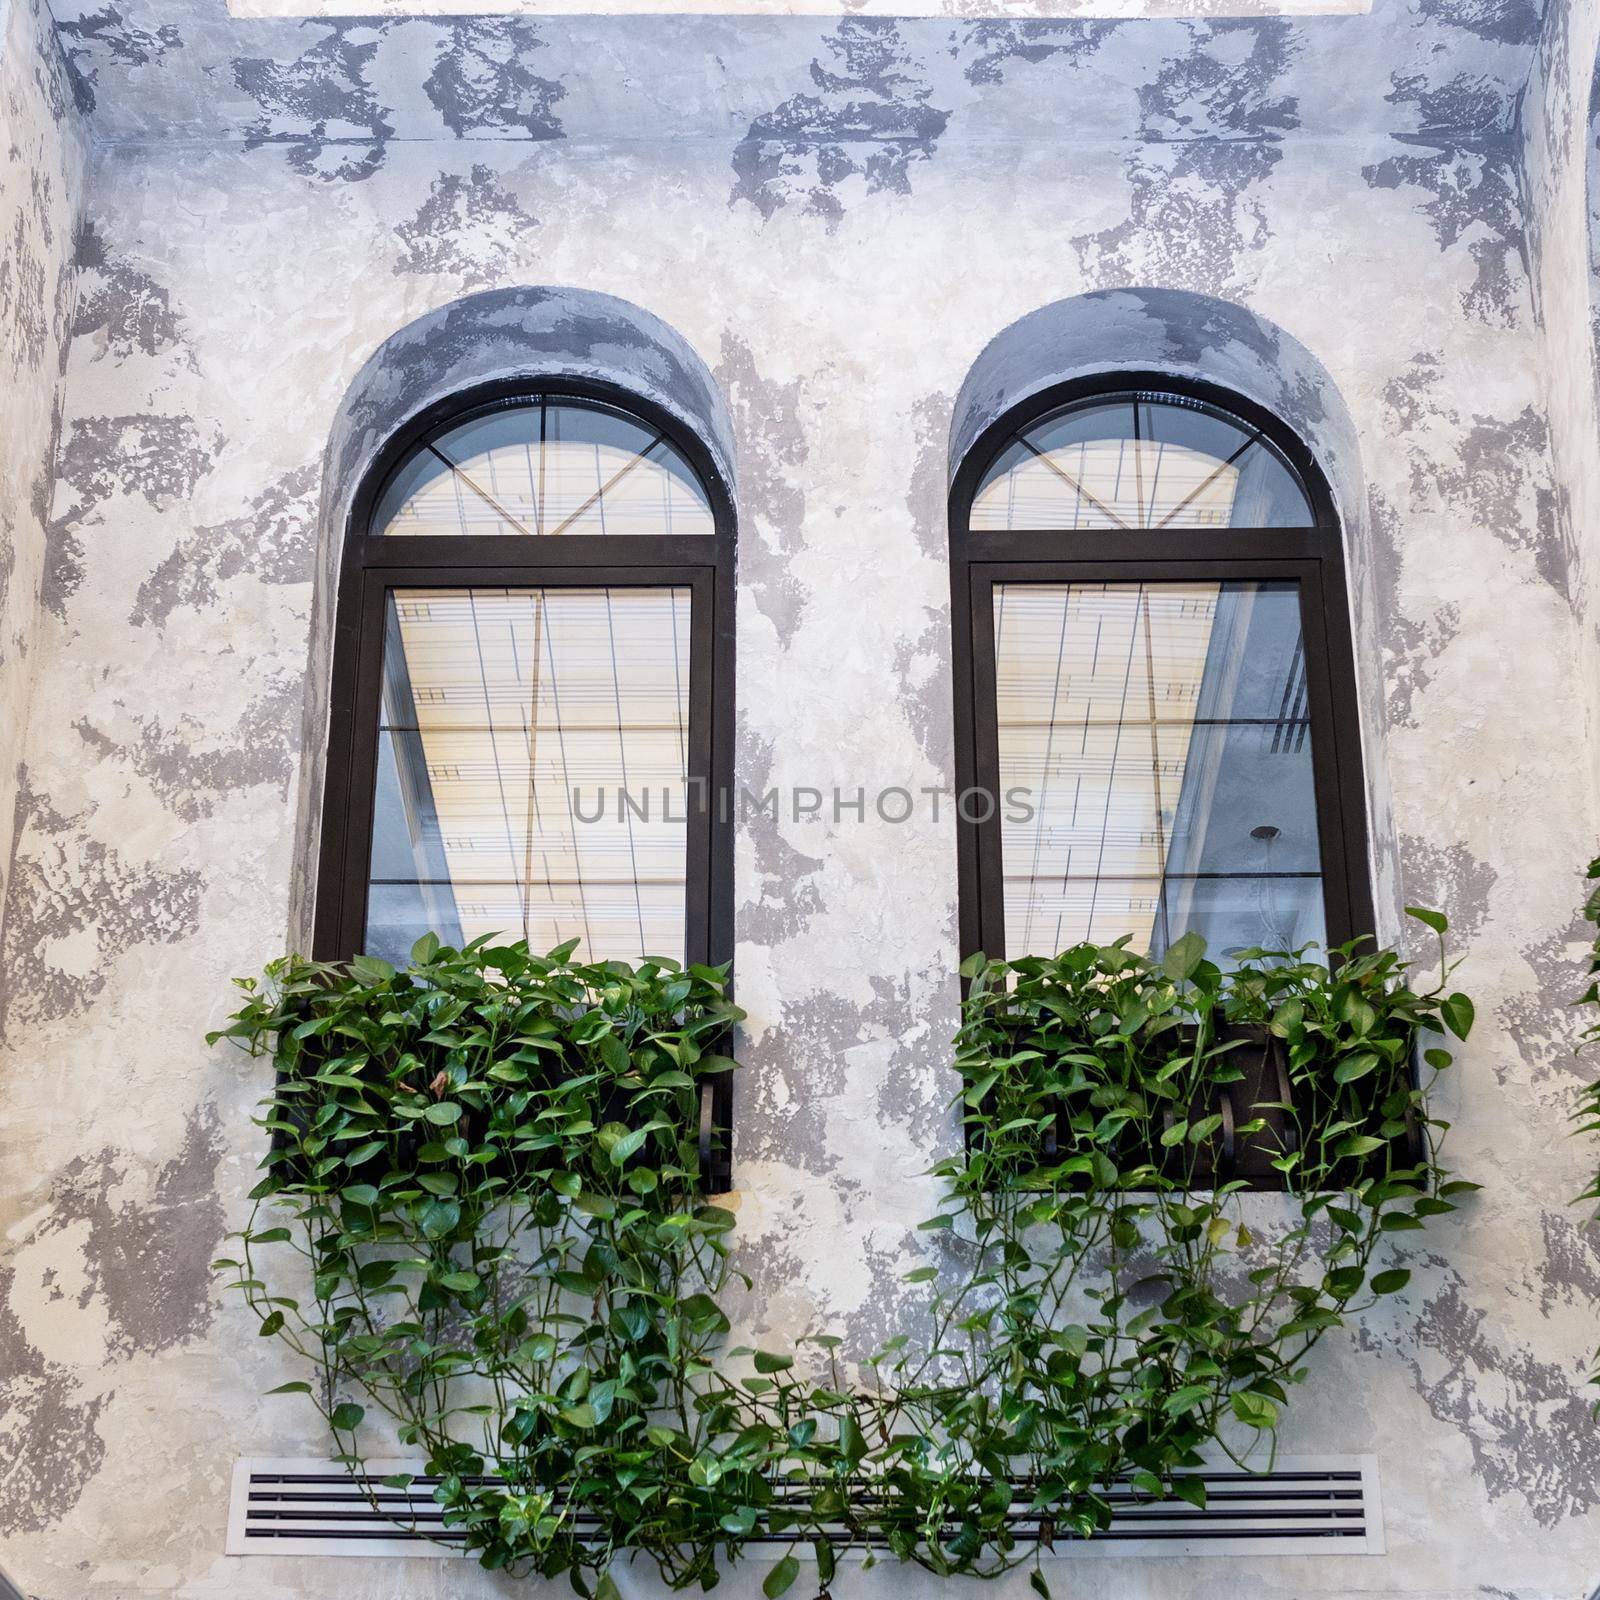 Golden Pothos, Devil's ivy, Epipremnum aureum plant on the windows by ferhad